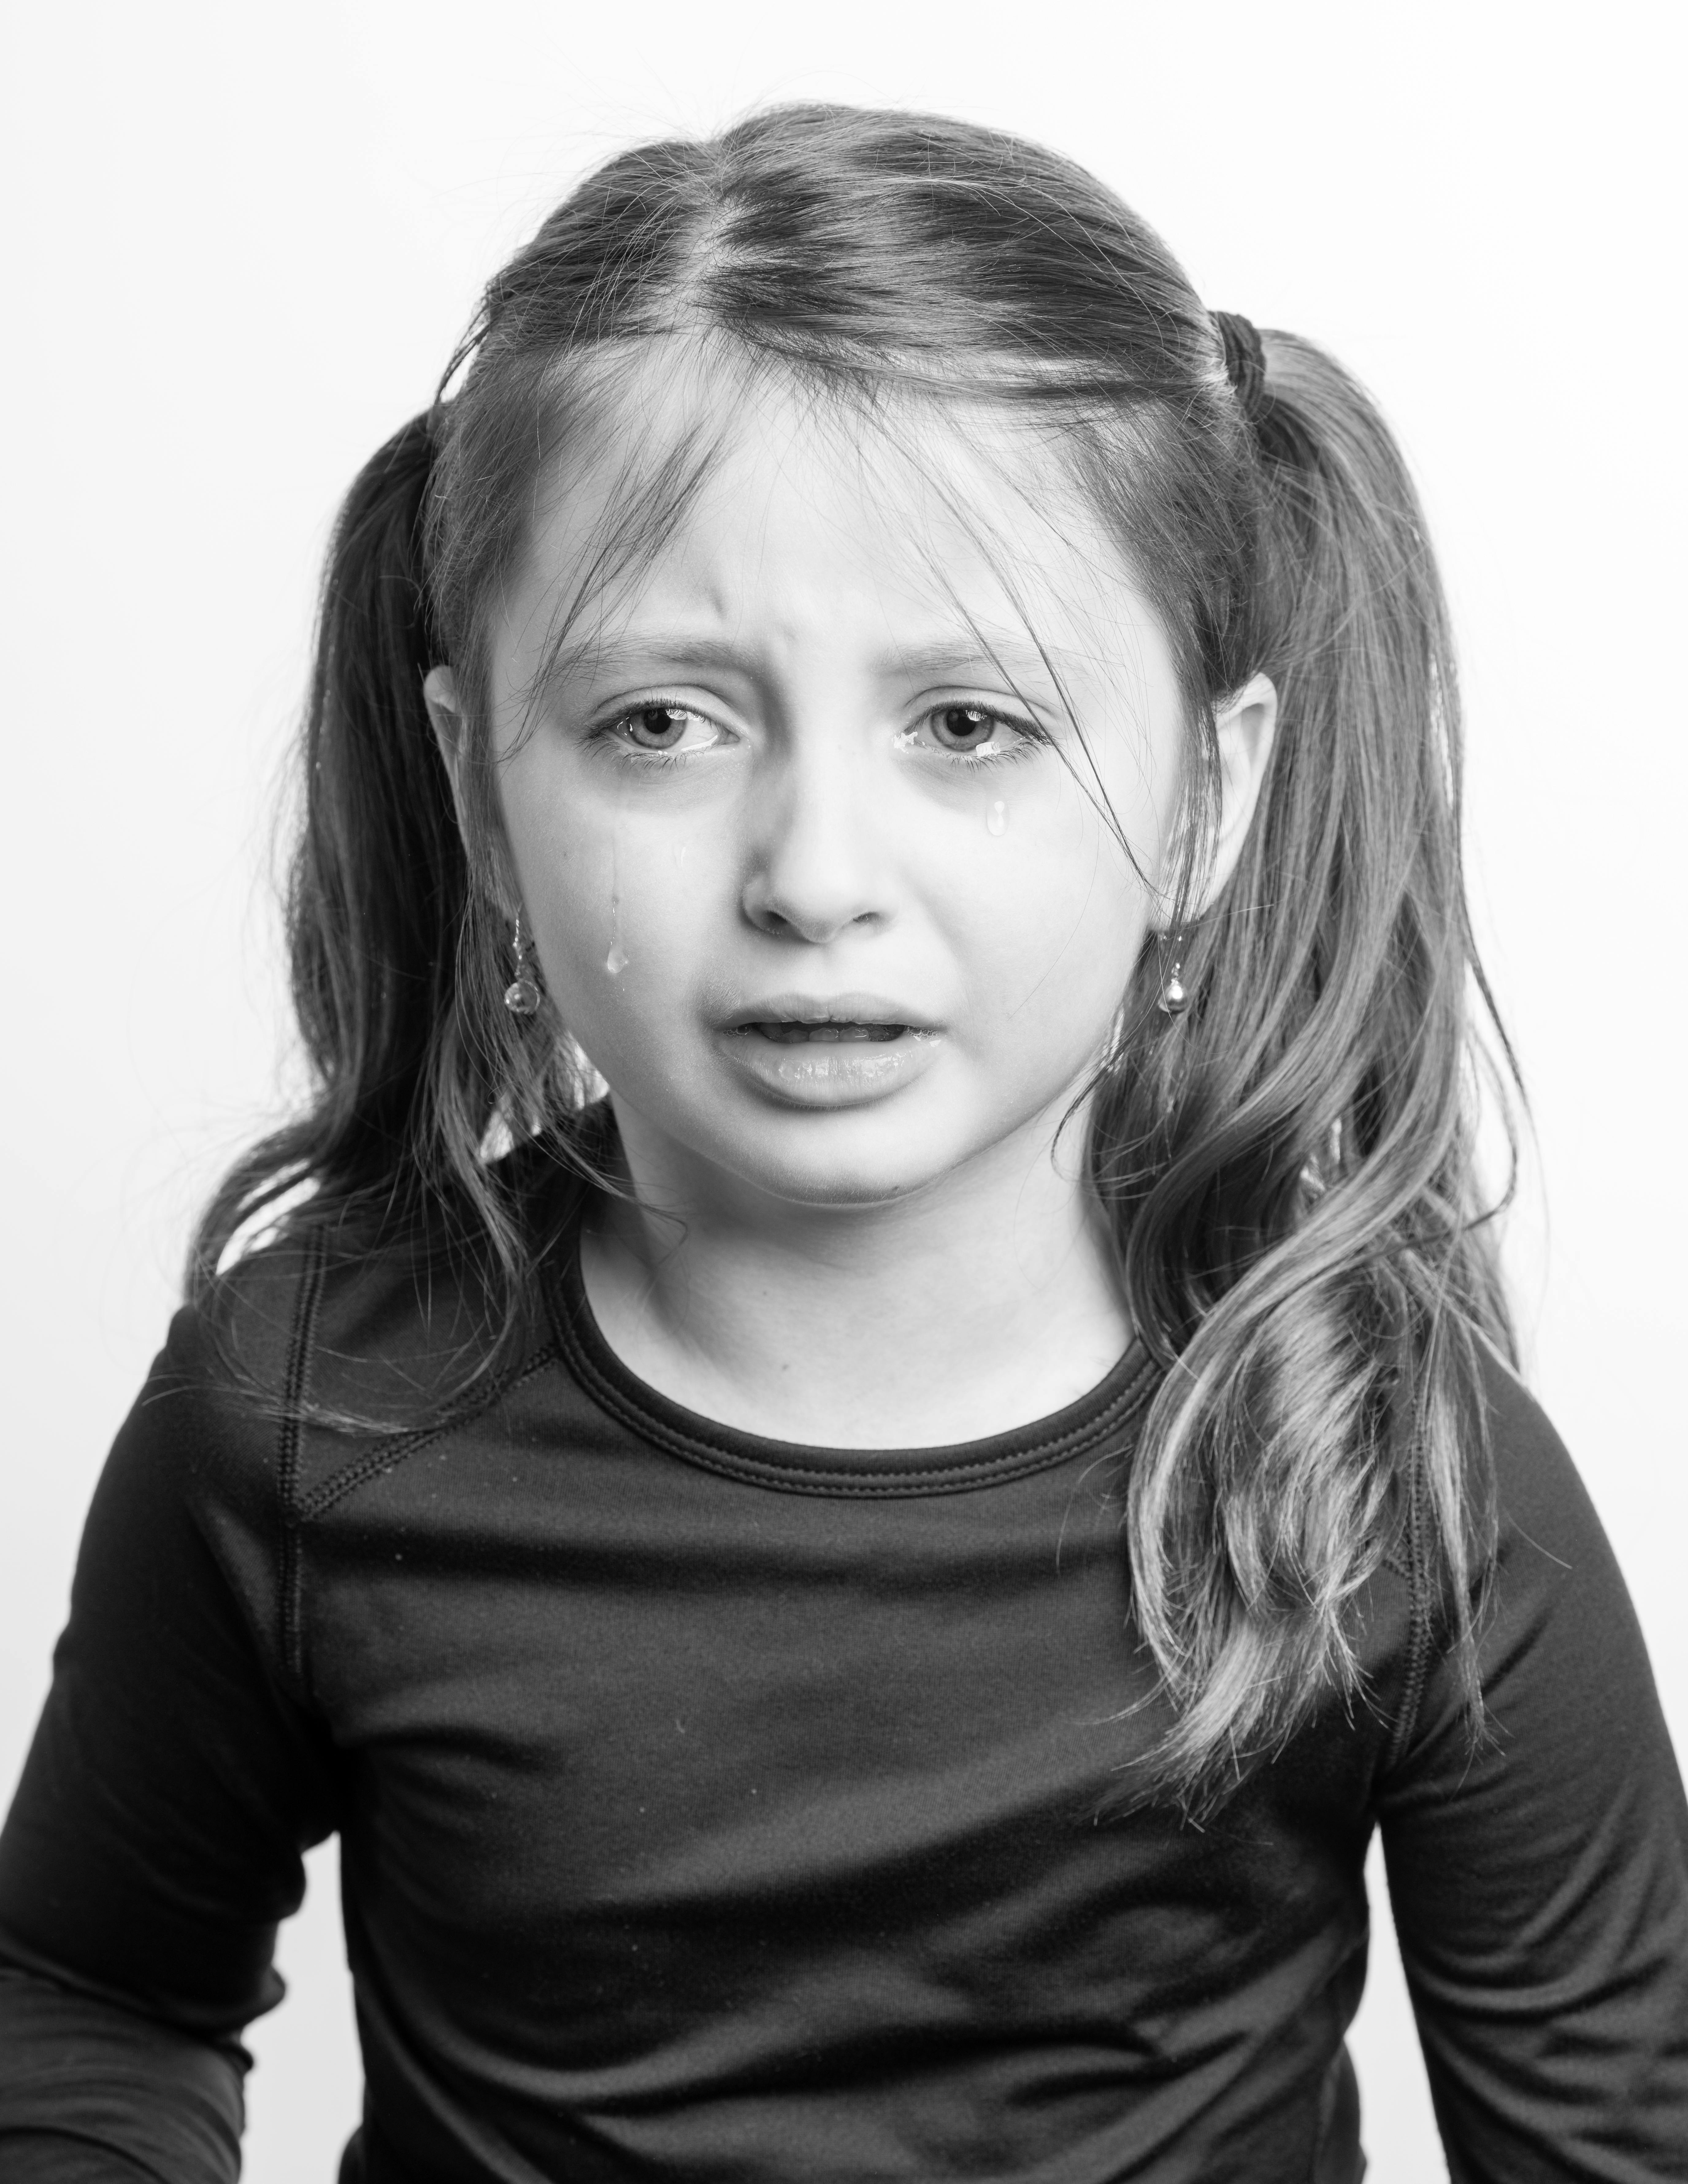 Une petite fille qui pleure | Source : Pexels